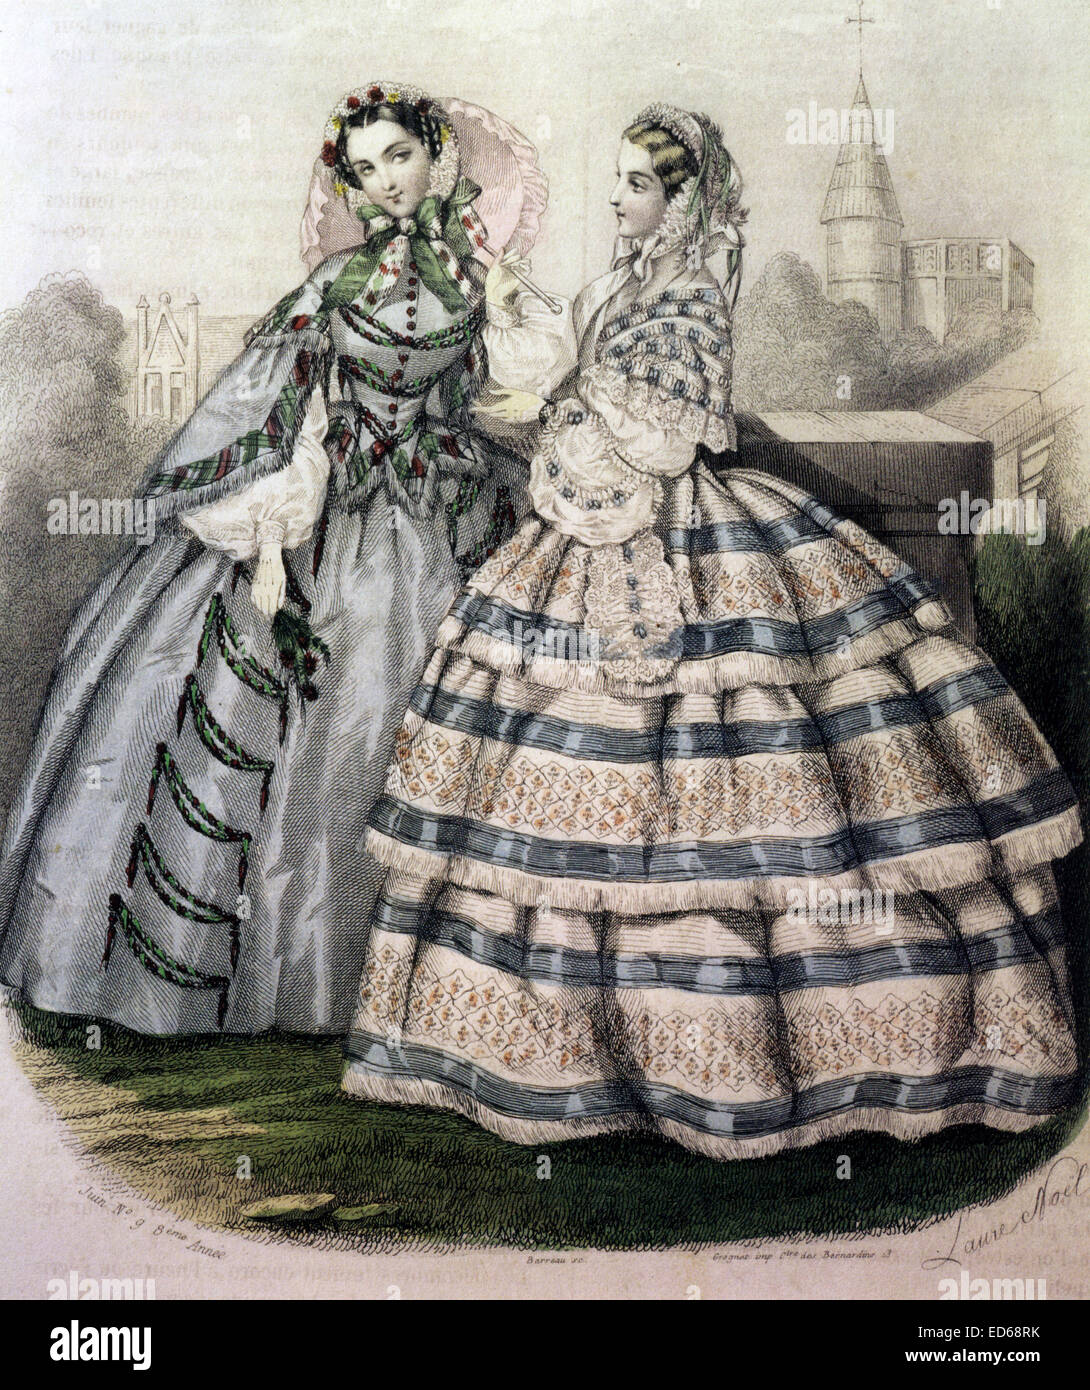 BALL AND WALKING TOILETTES, 19th Century Fashion Stock Photo - Alamy